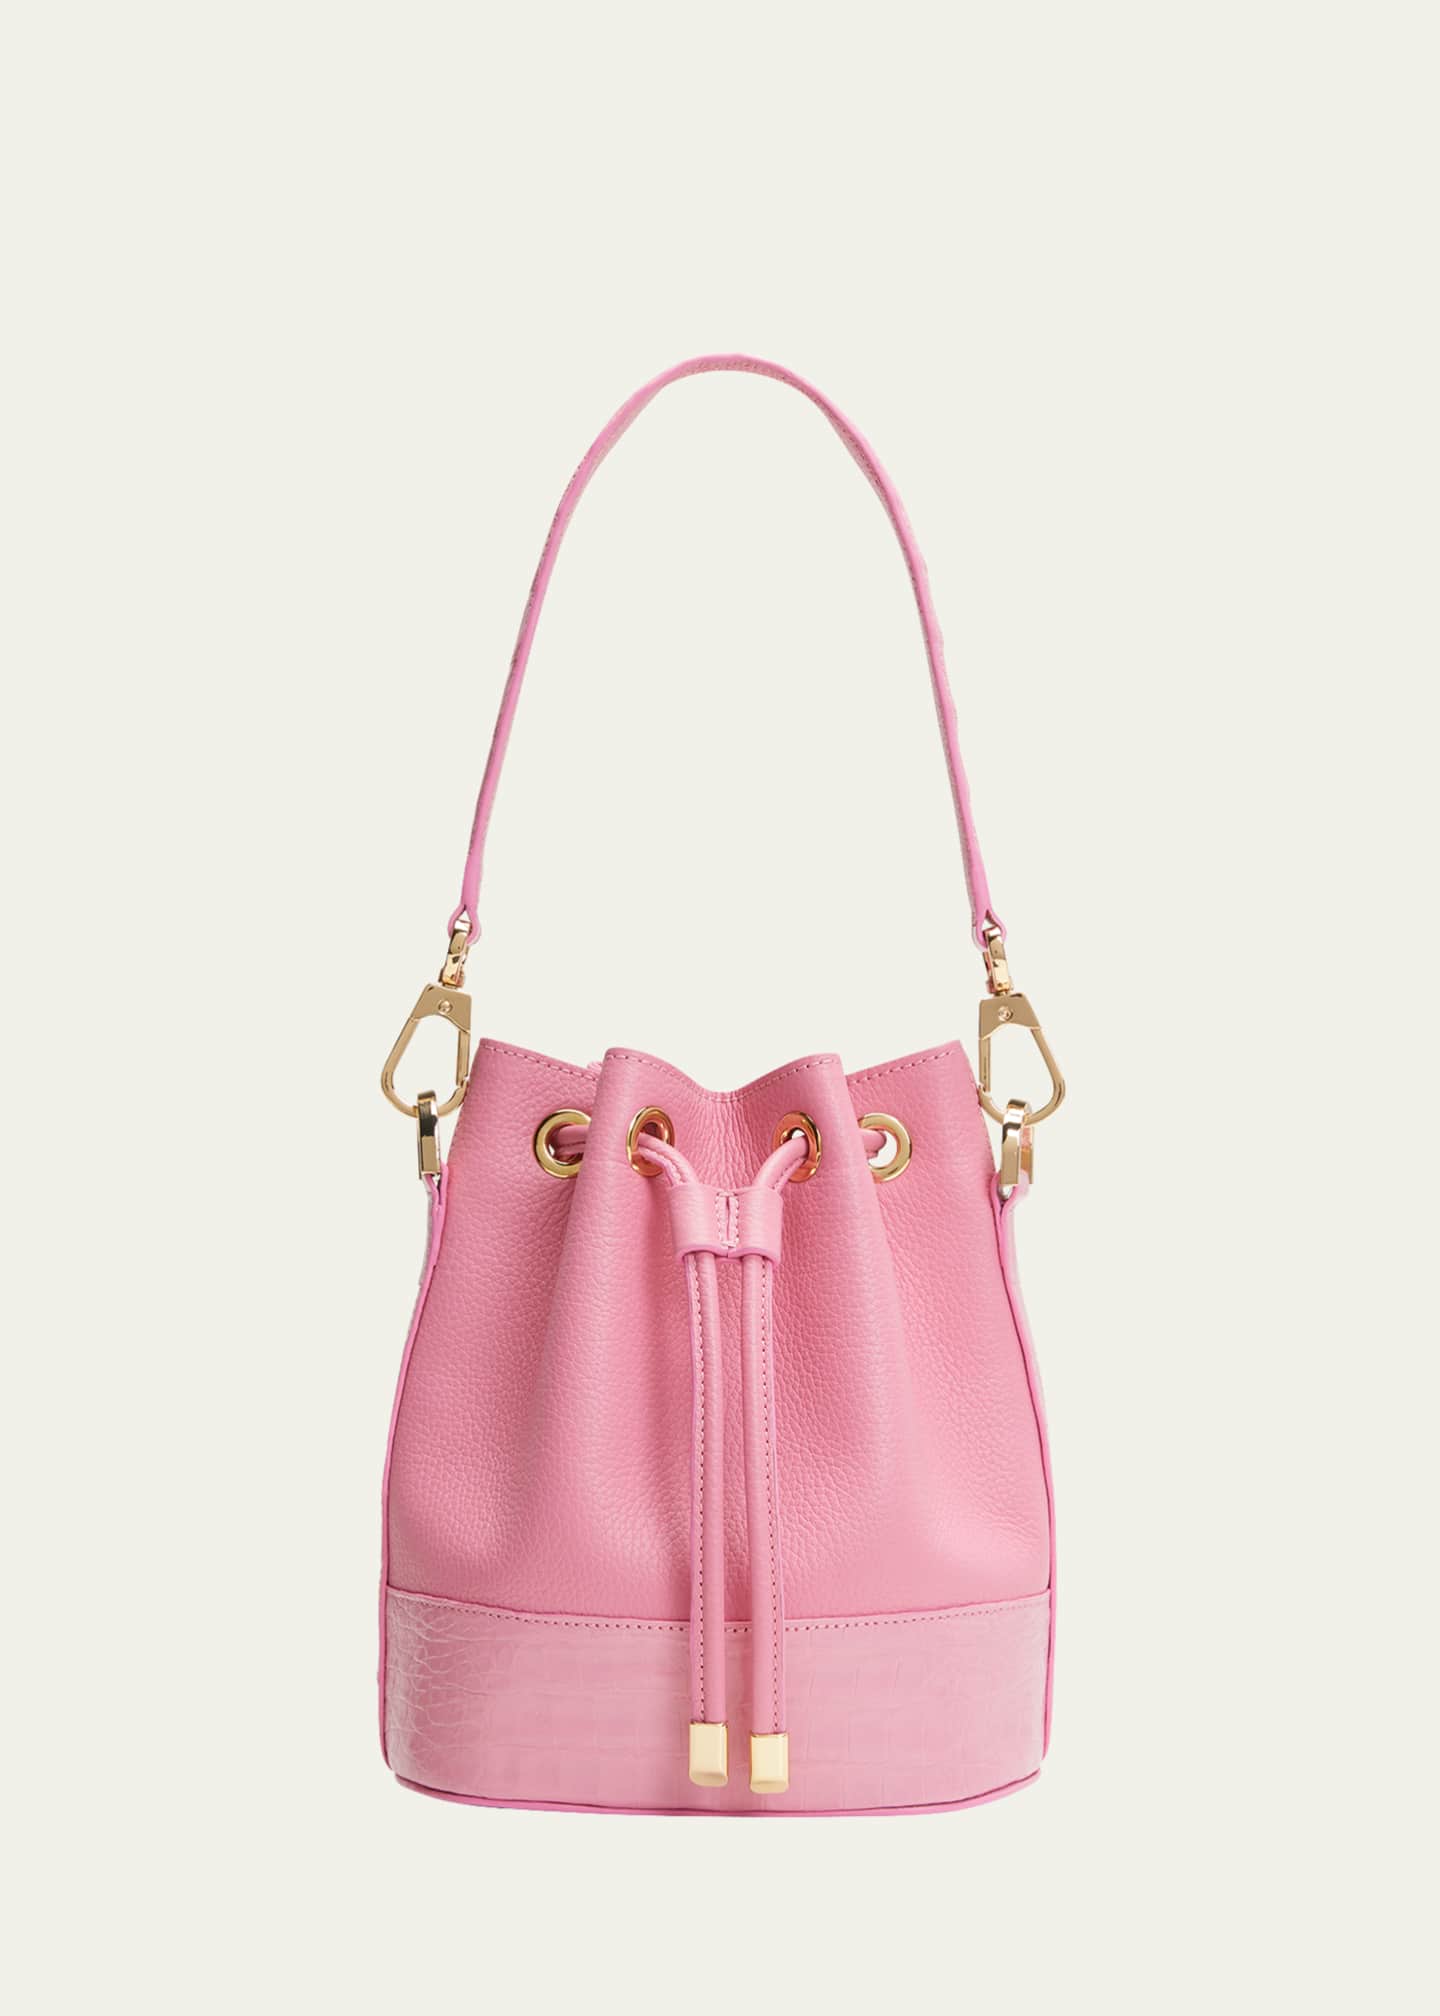 Designer Bucket Bags, Womens Luxury Bucket Bags